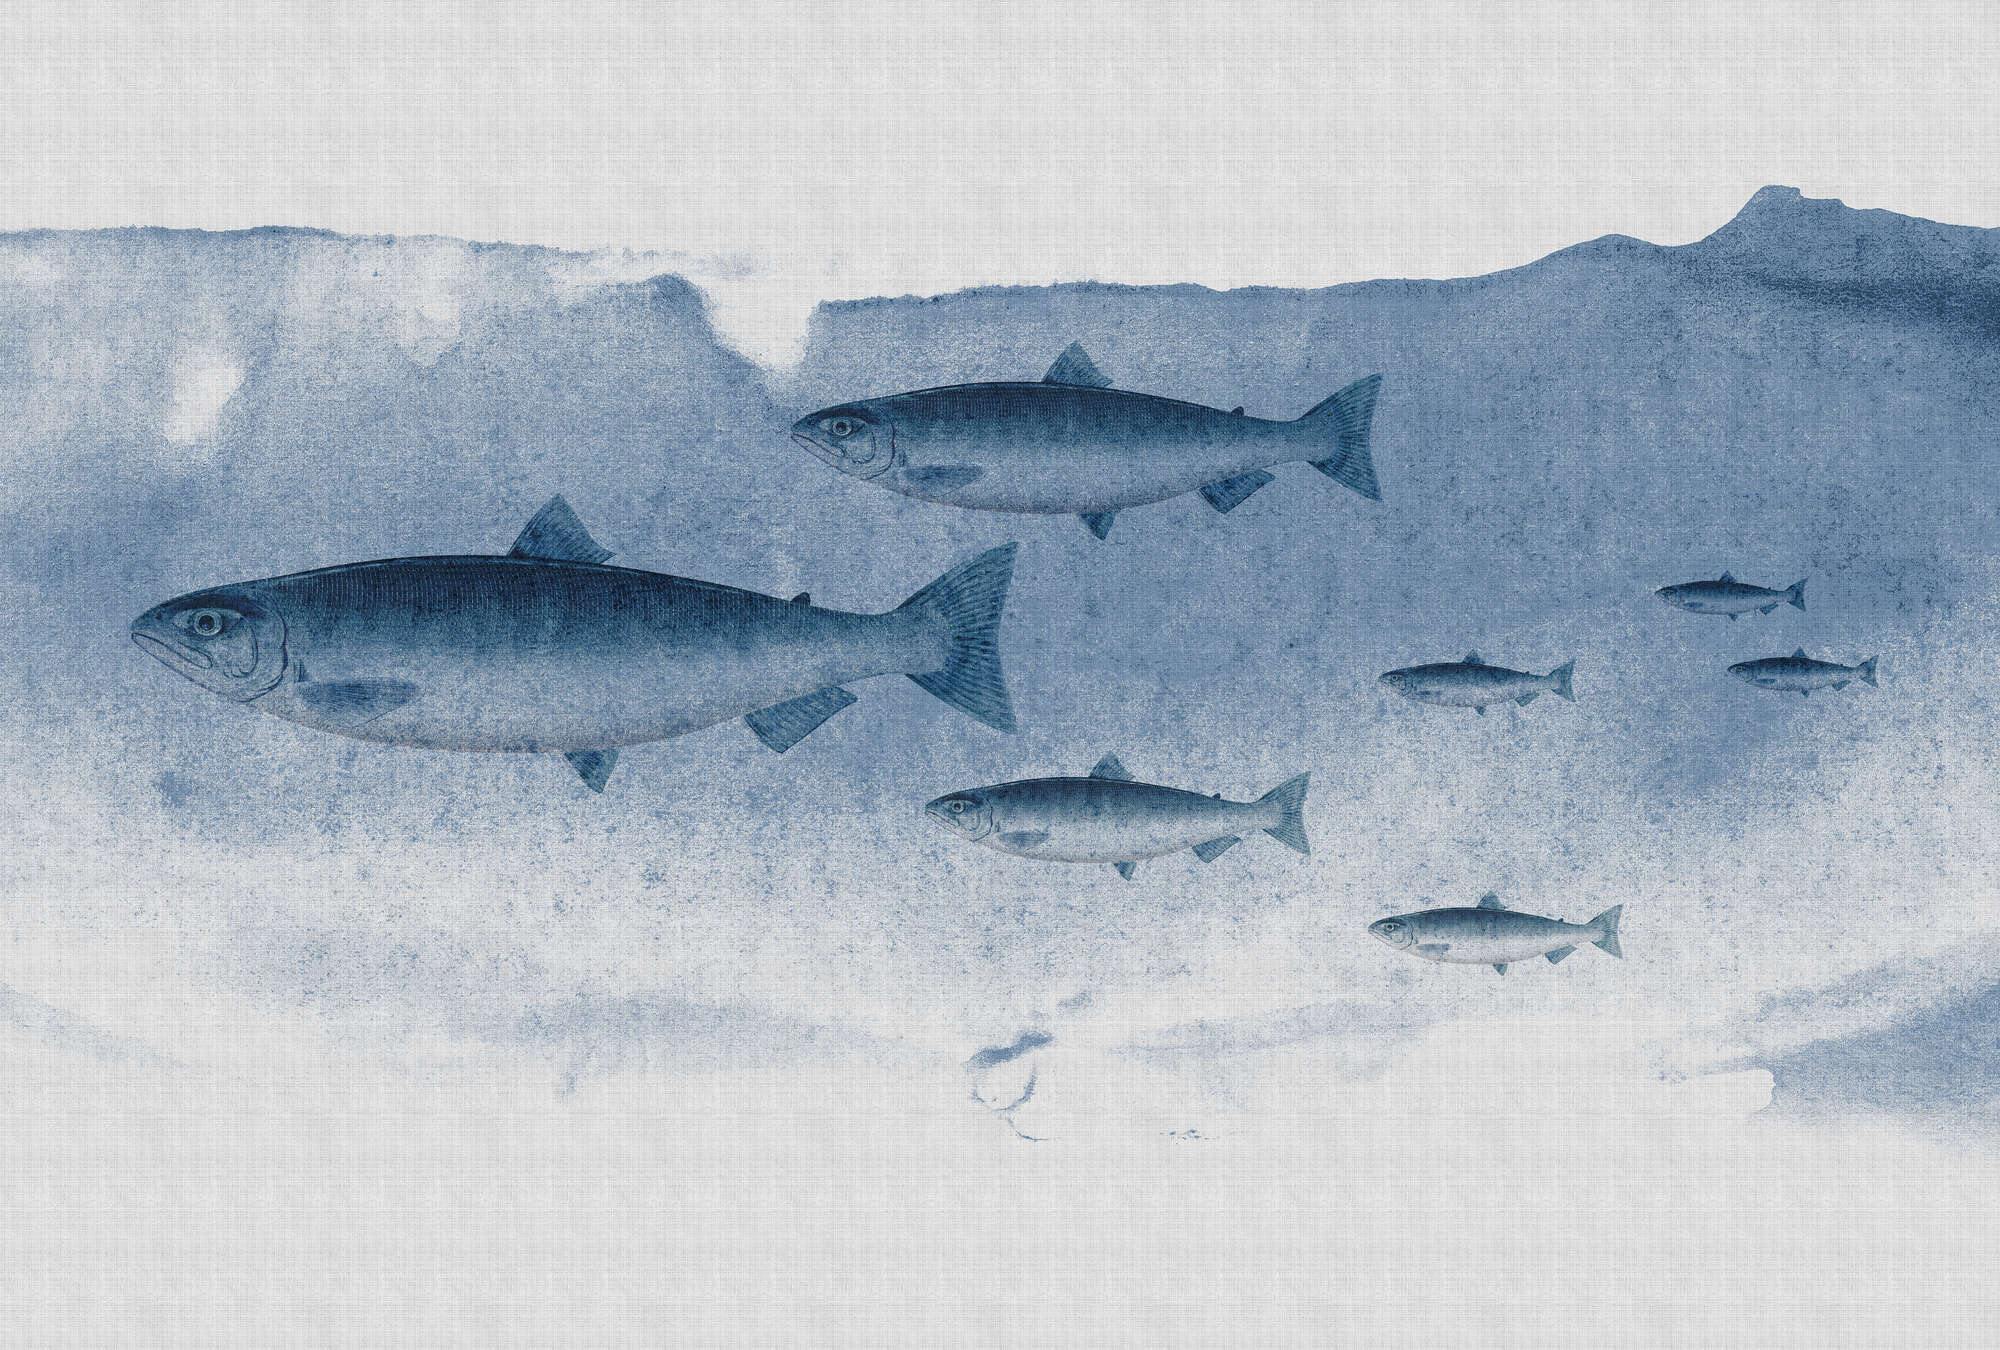             Into the blue 1 - Acuarela de peces en azul como papel pintado fotográfico en estructura de lino natural - Azul, Gris | Perla liso no tejido
        